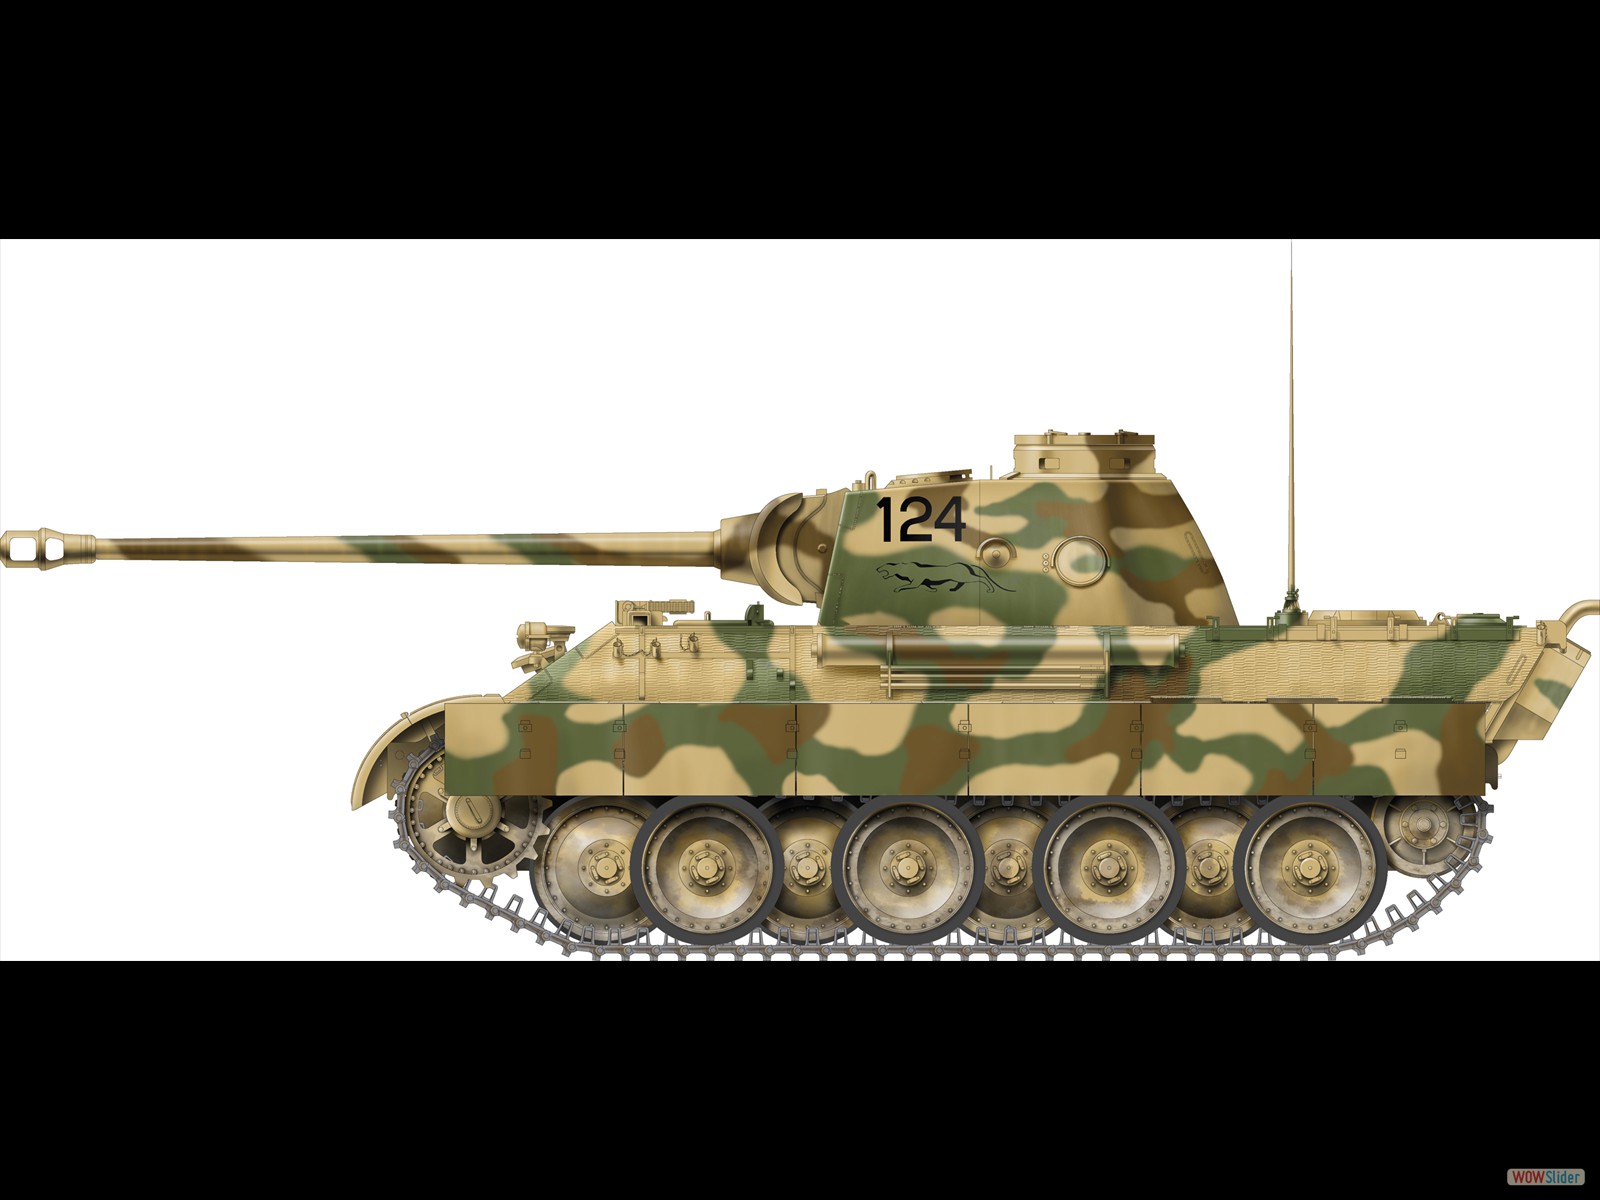 Pz.Kpfw. V Ausf D 124